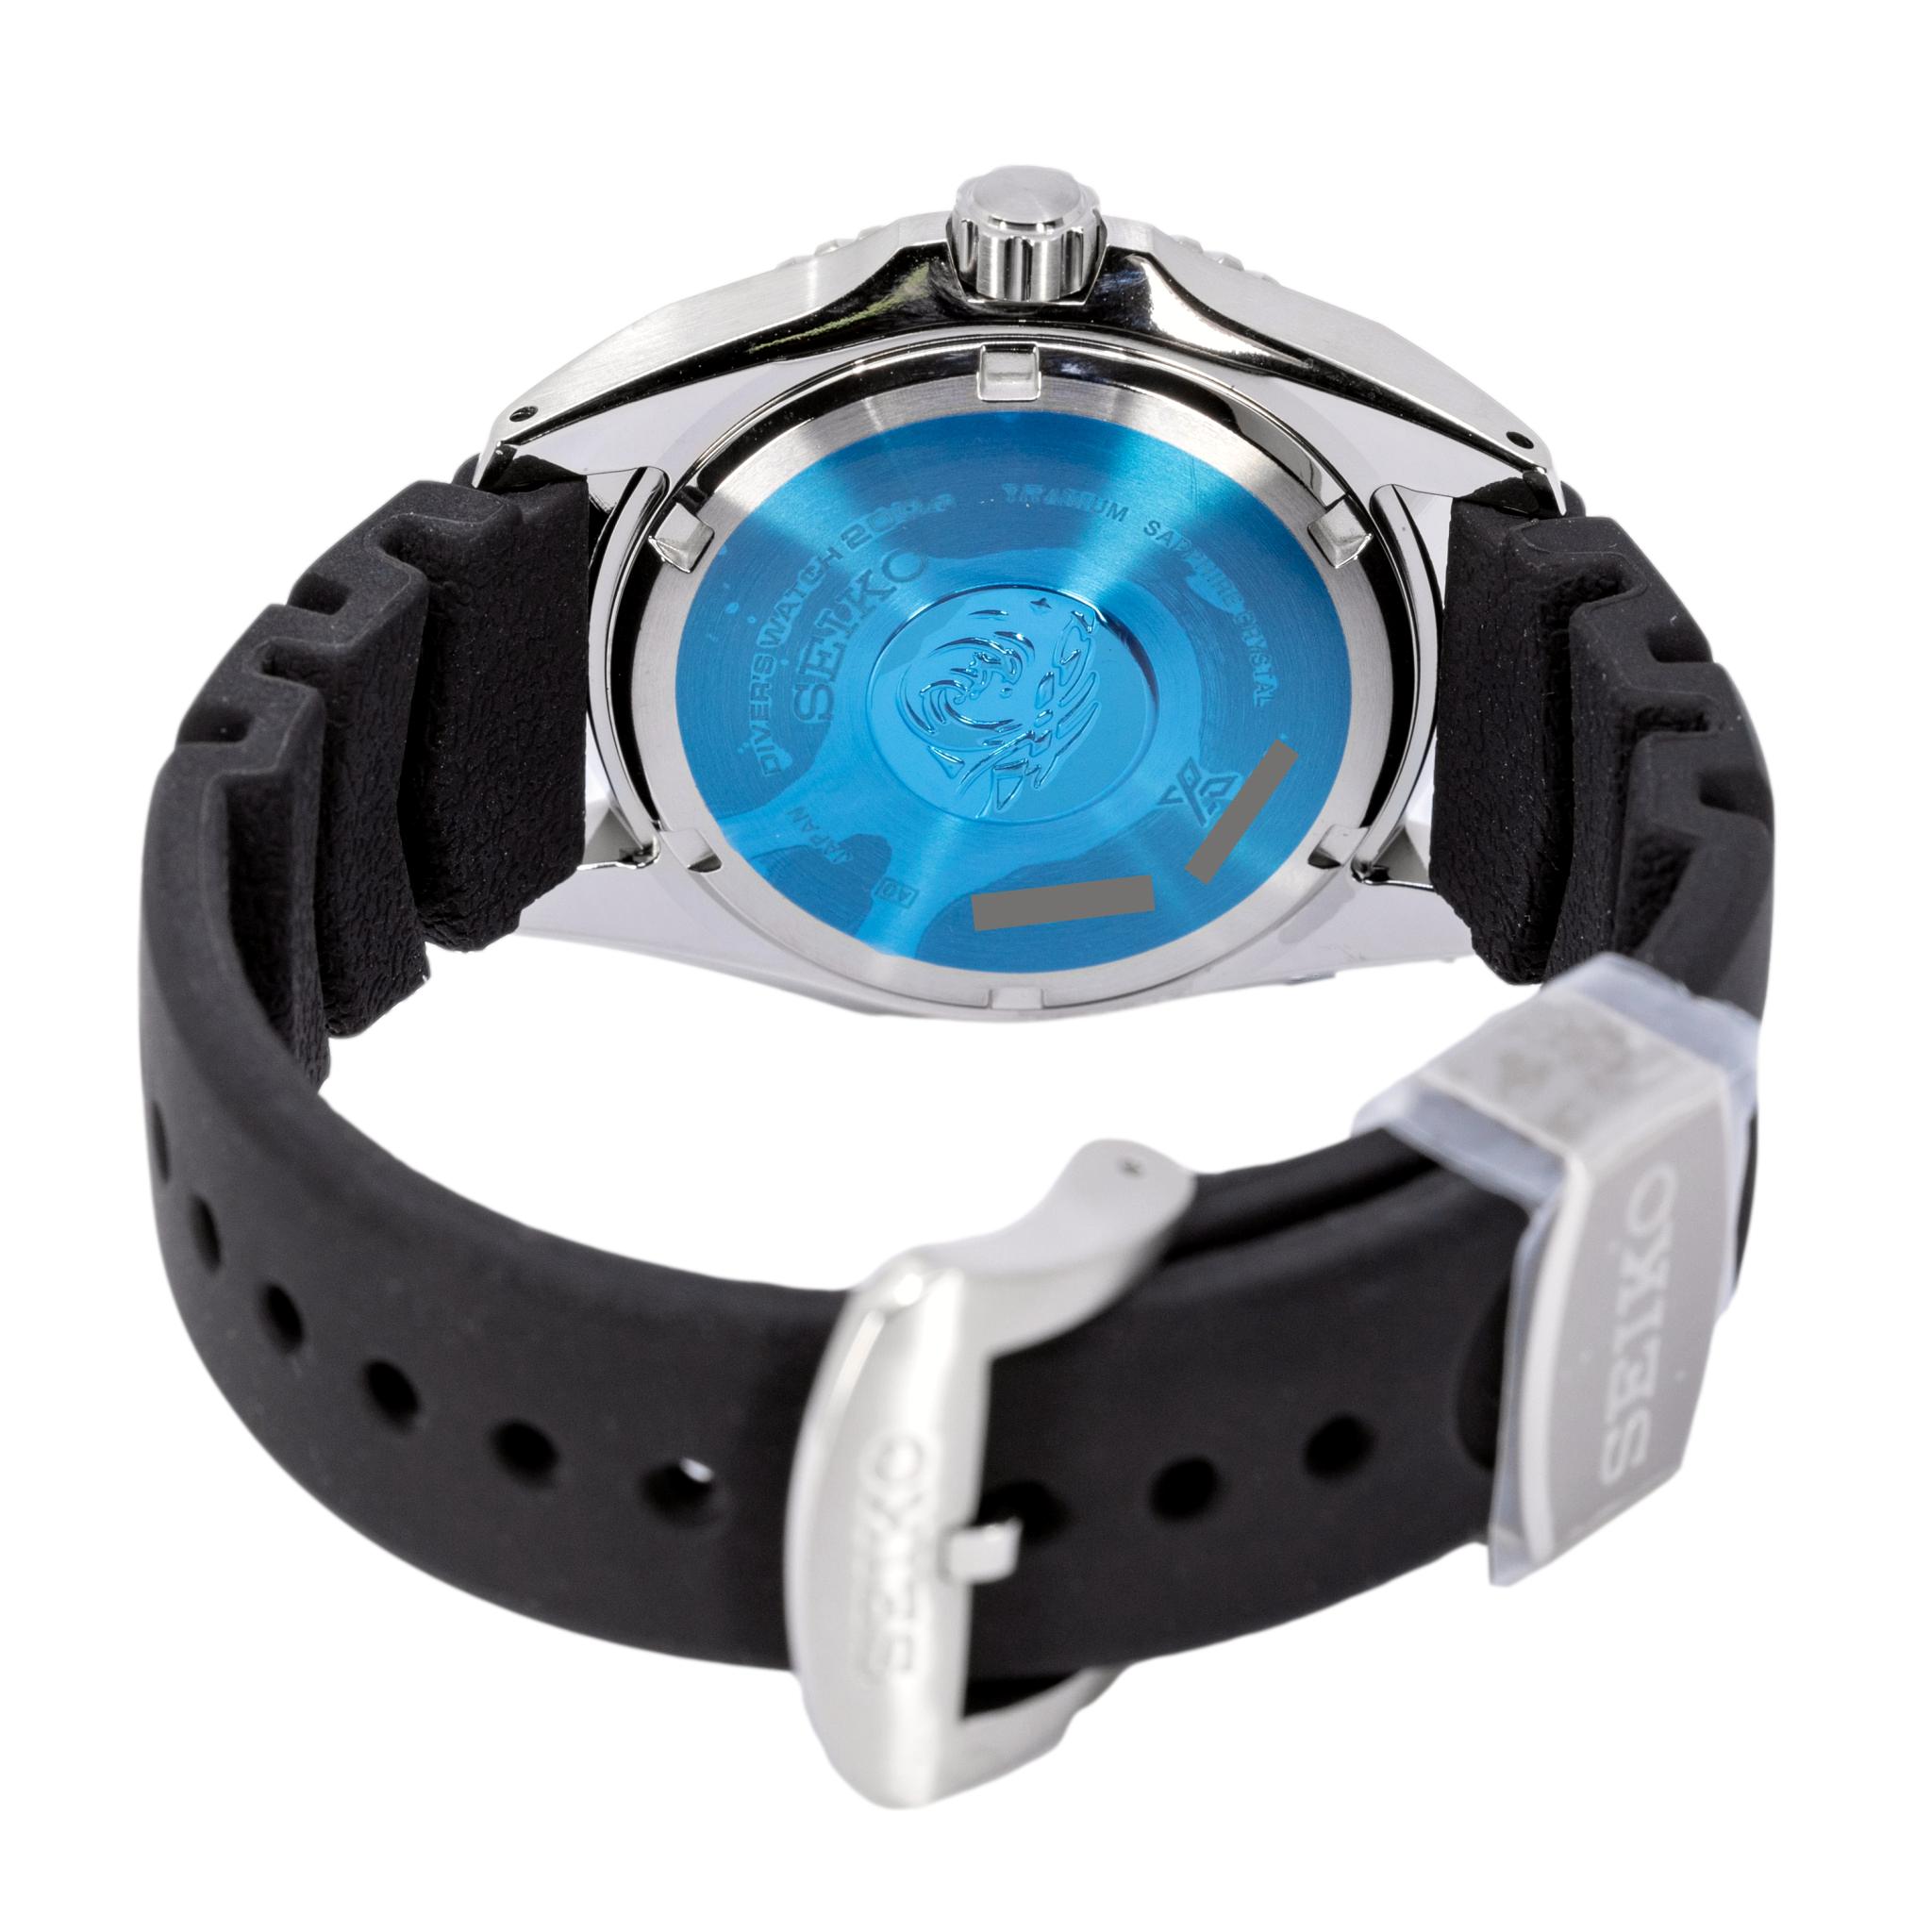 SPB191J1-Seiko Men's SPB191J1 Prospex White Dial Watch 